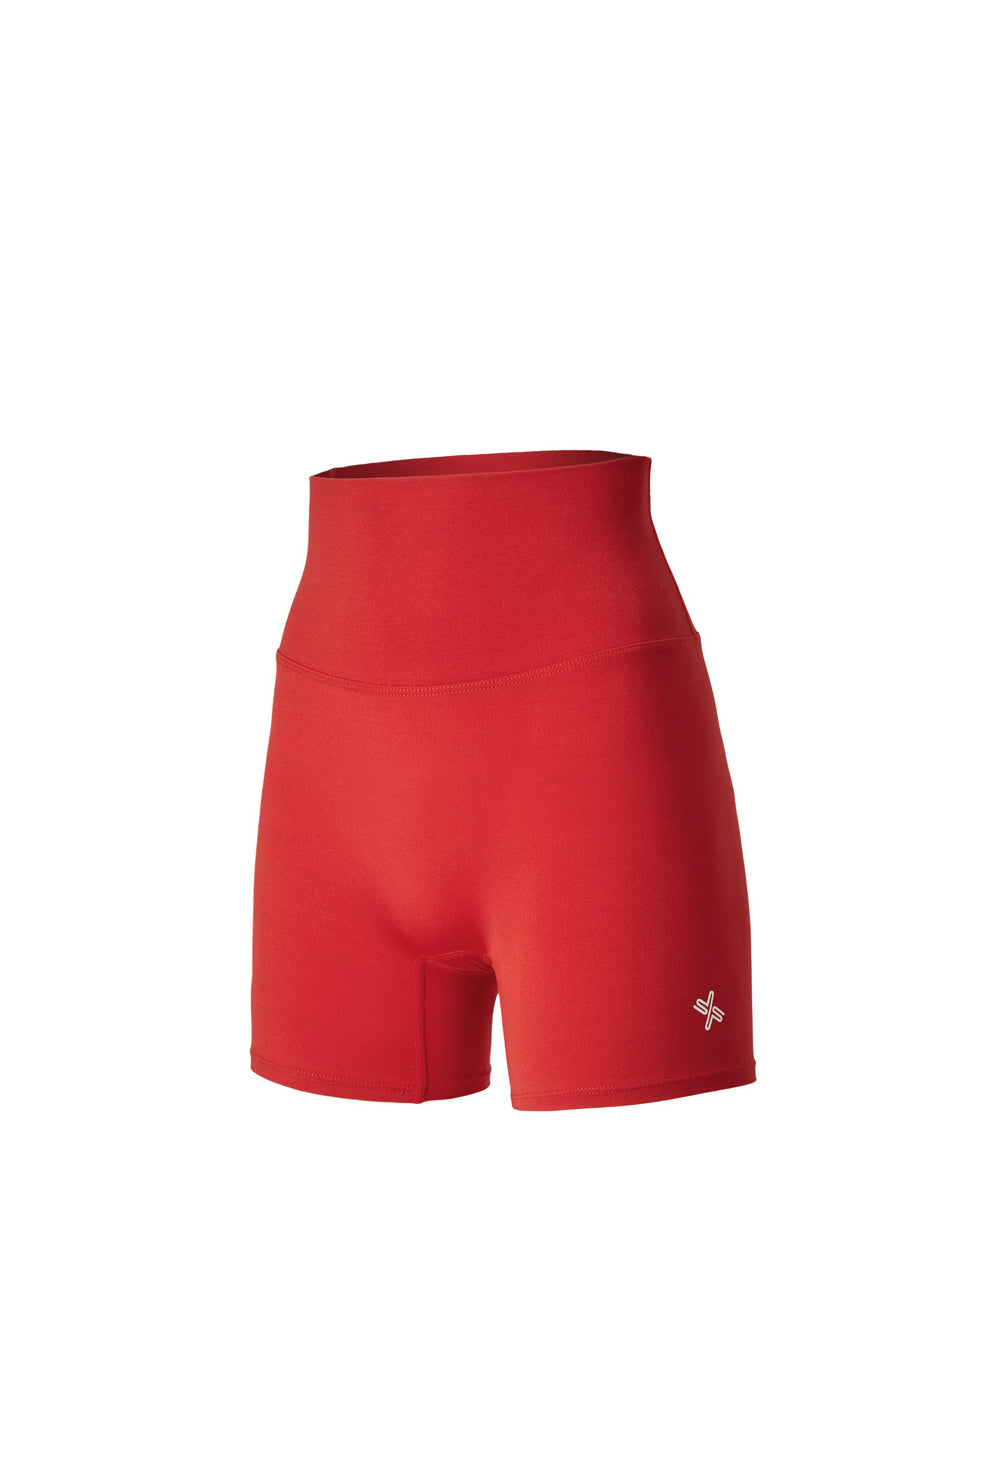 XELLA Intention 3.5 Shorts - Racing Red